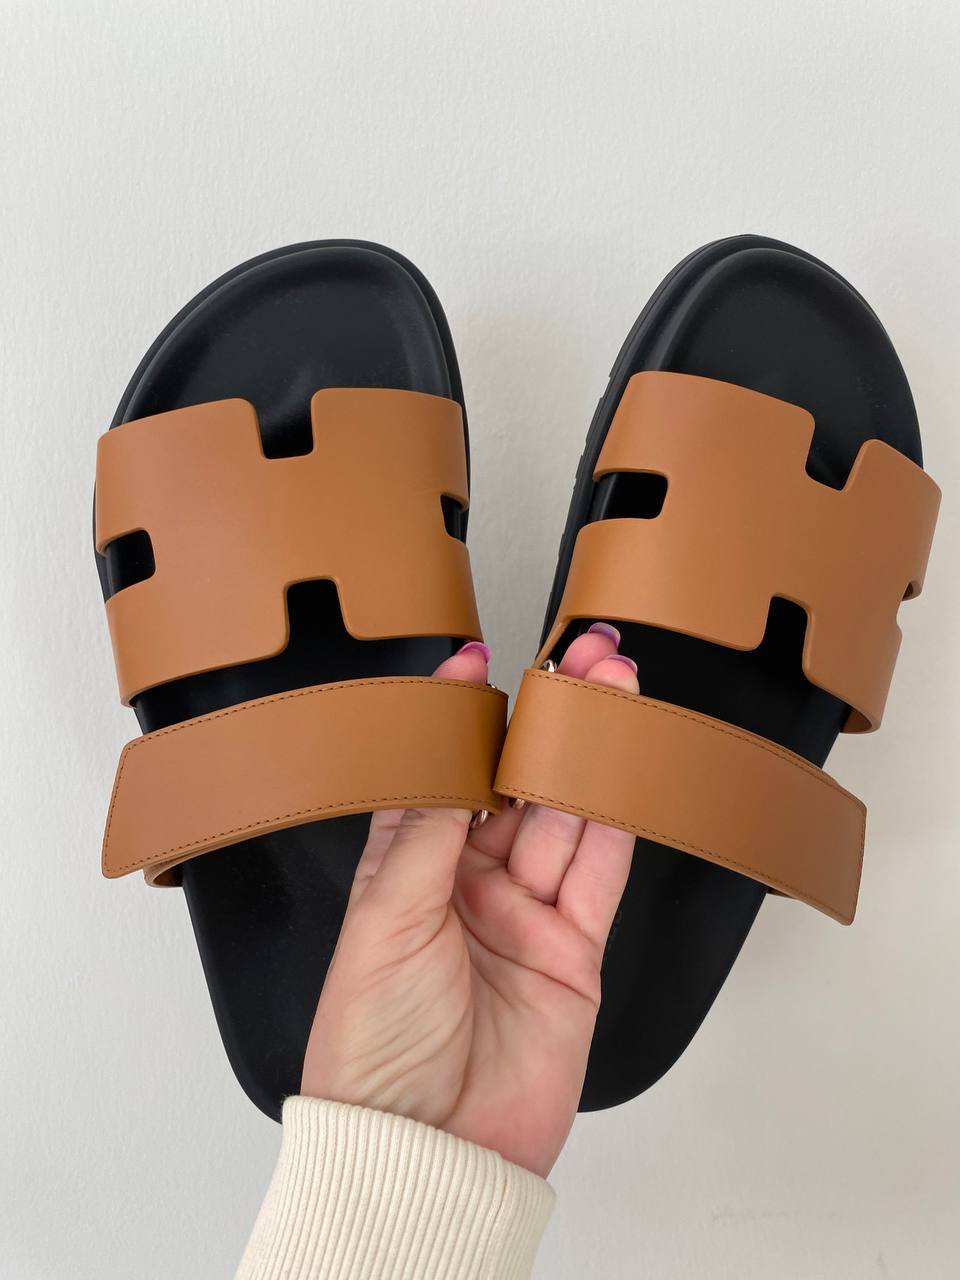 Hermes Chypre sandals tan men's style